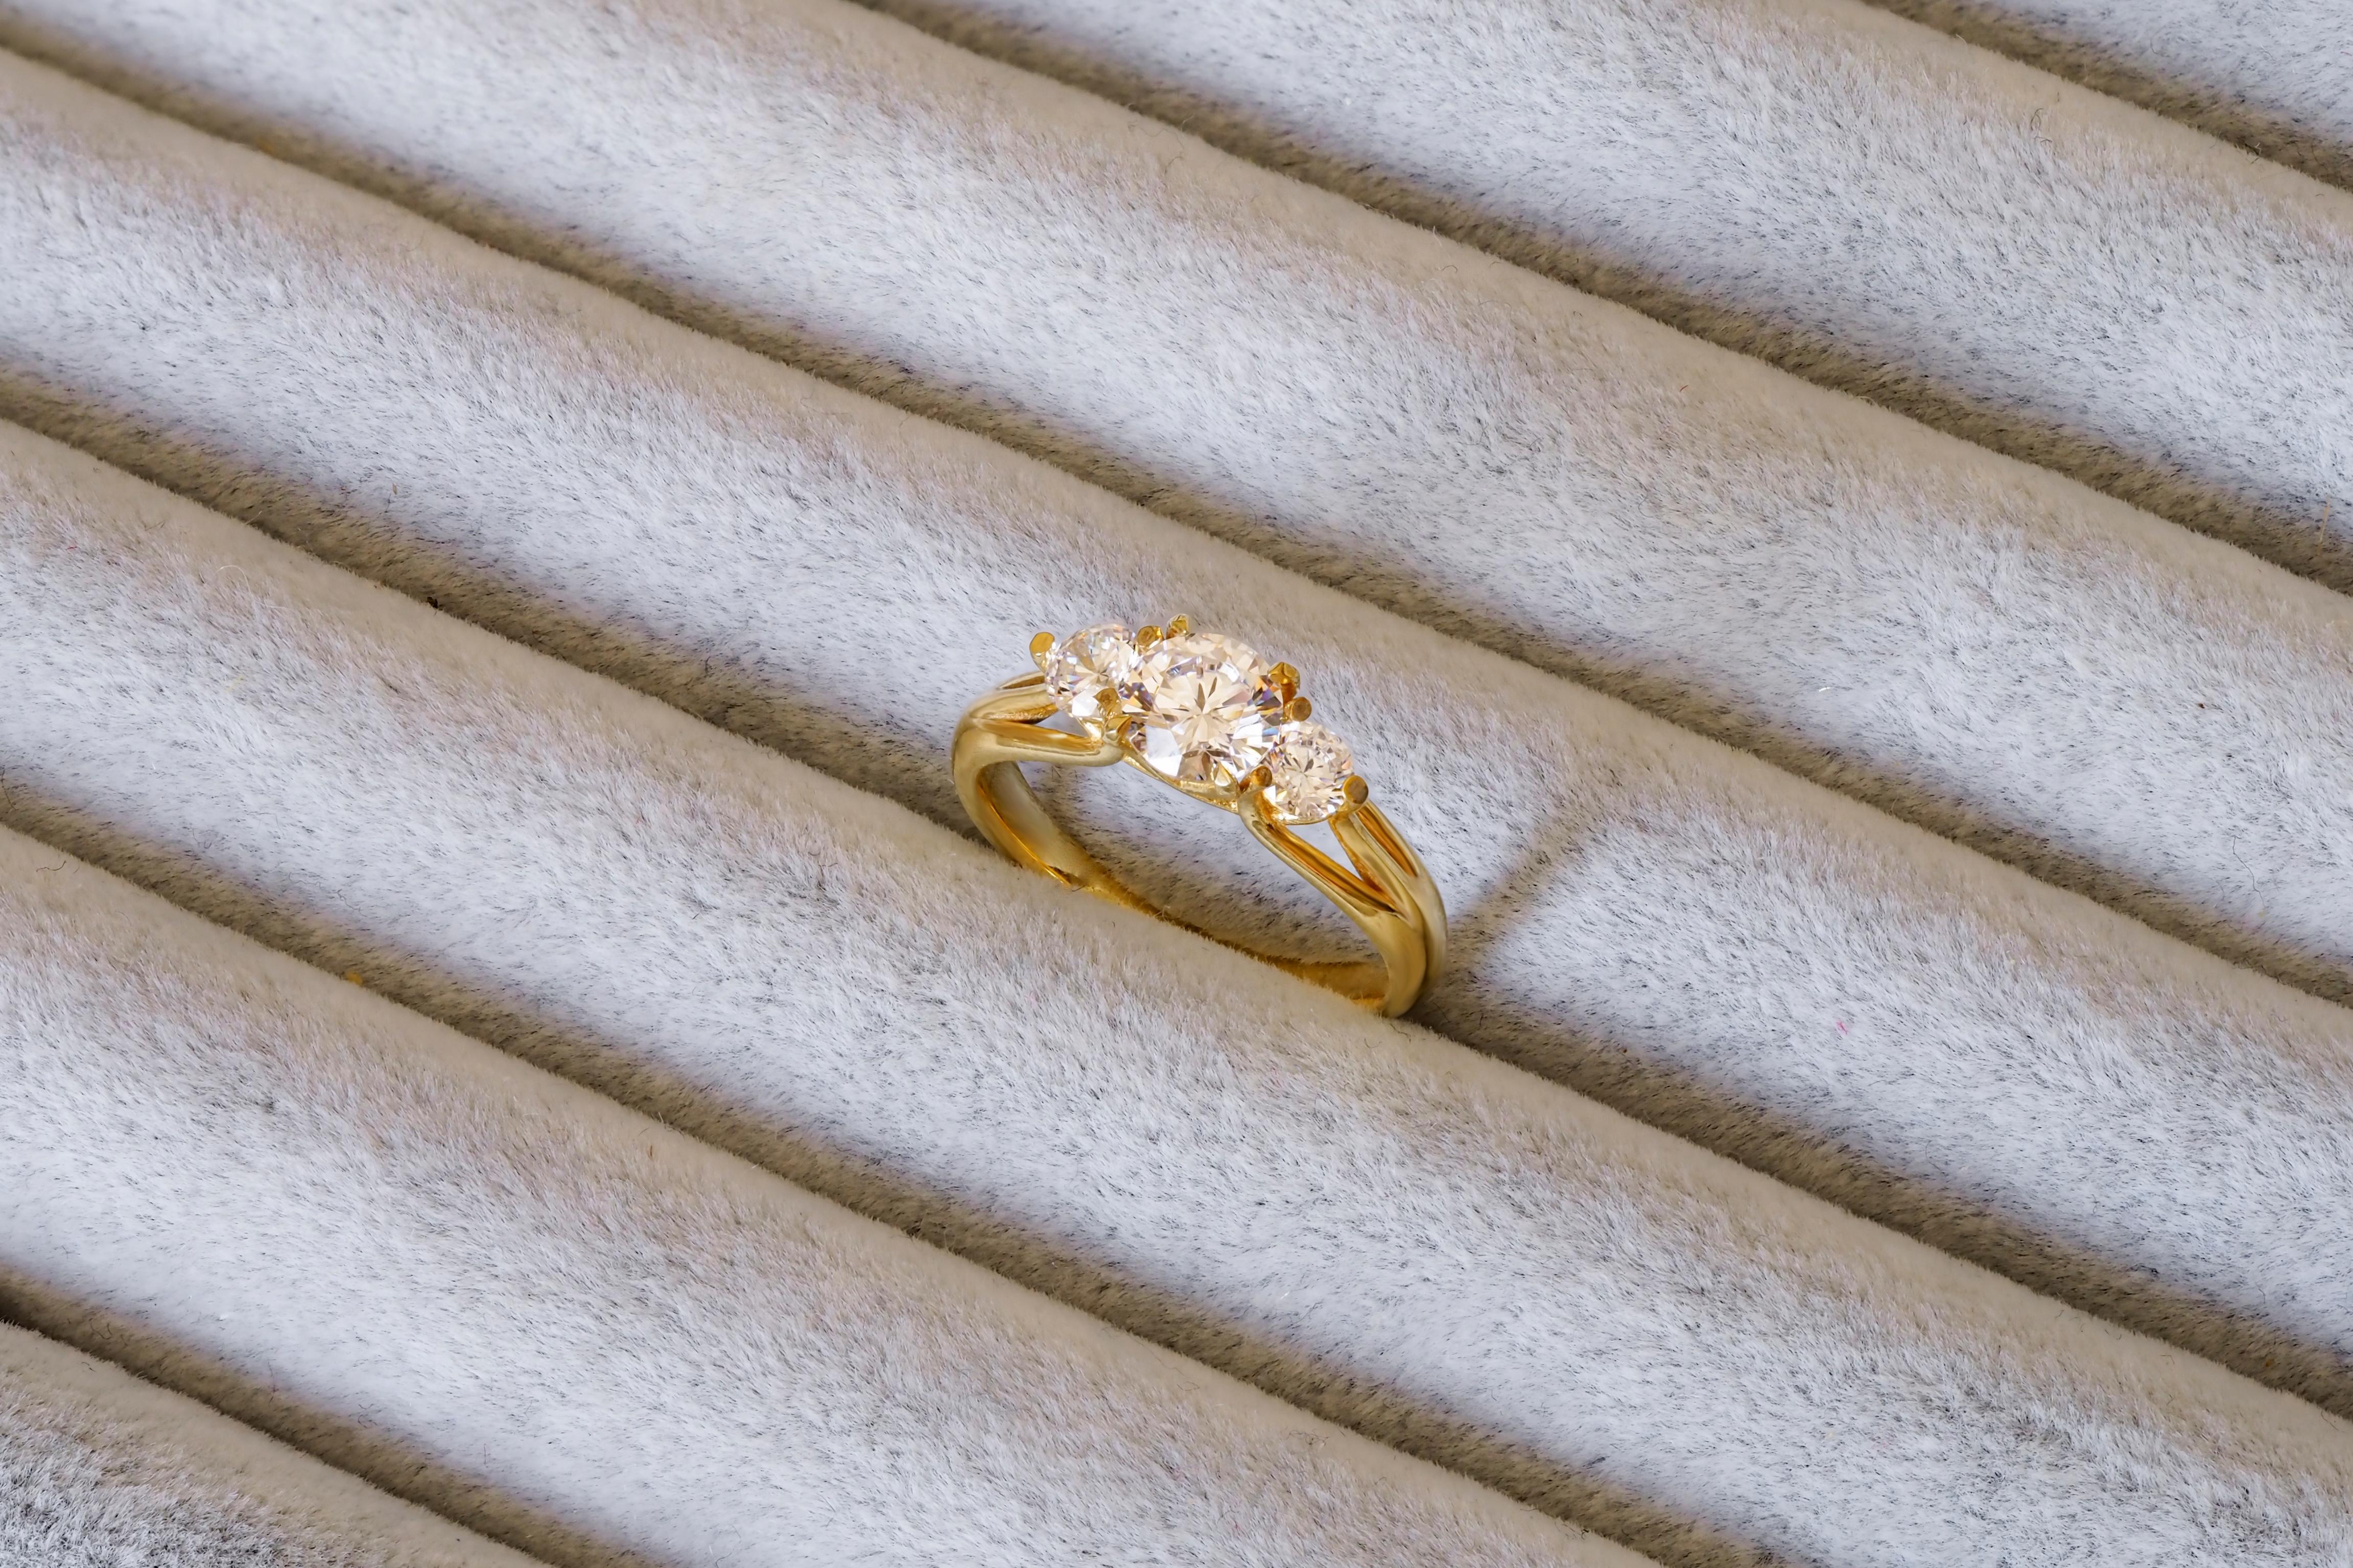 For Sale:  3 round moissanite 14k gold engagement ring. 10